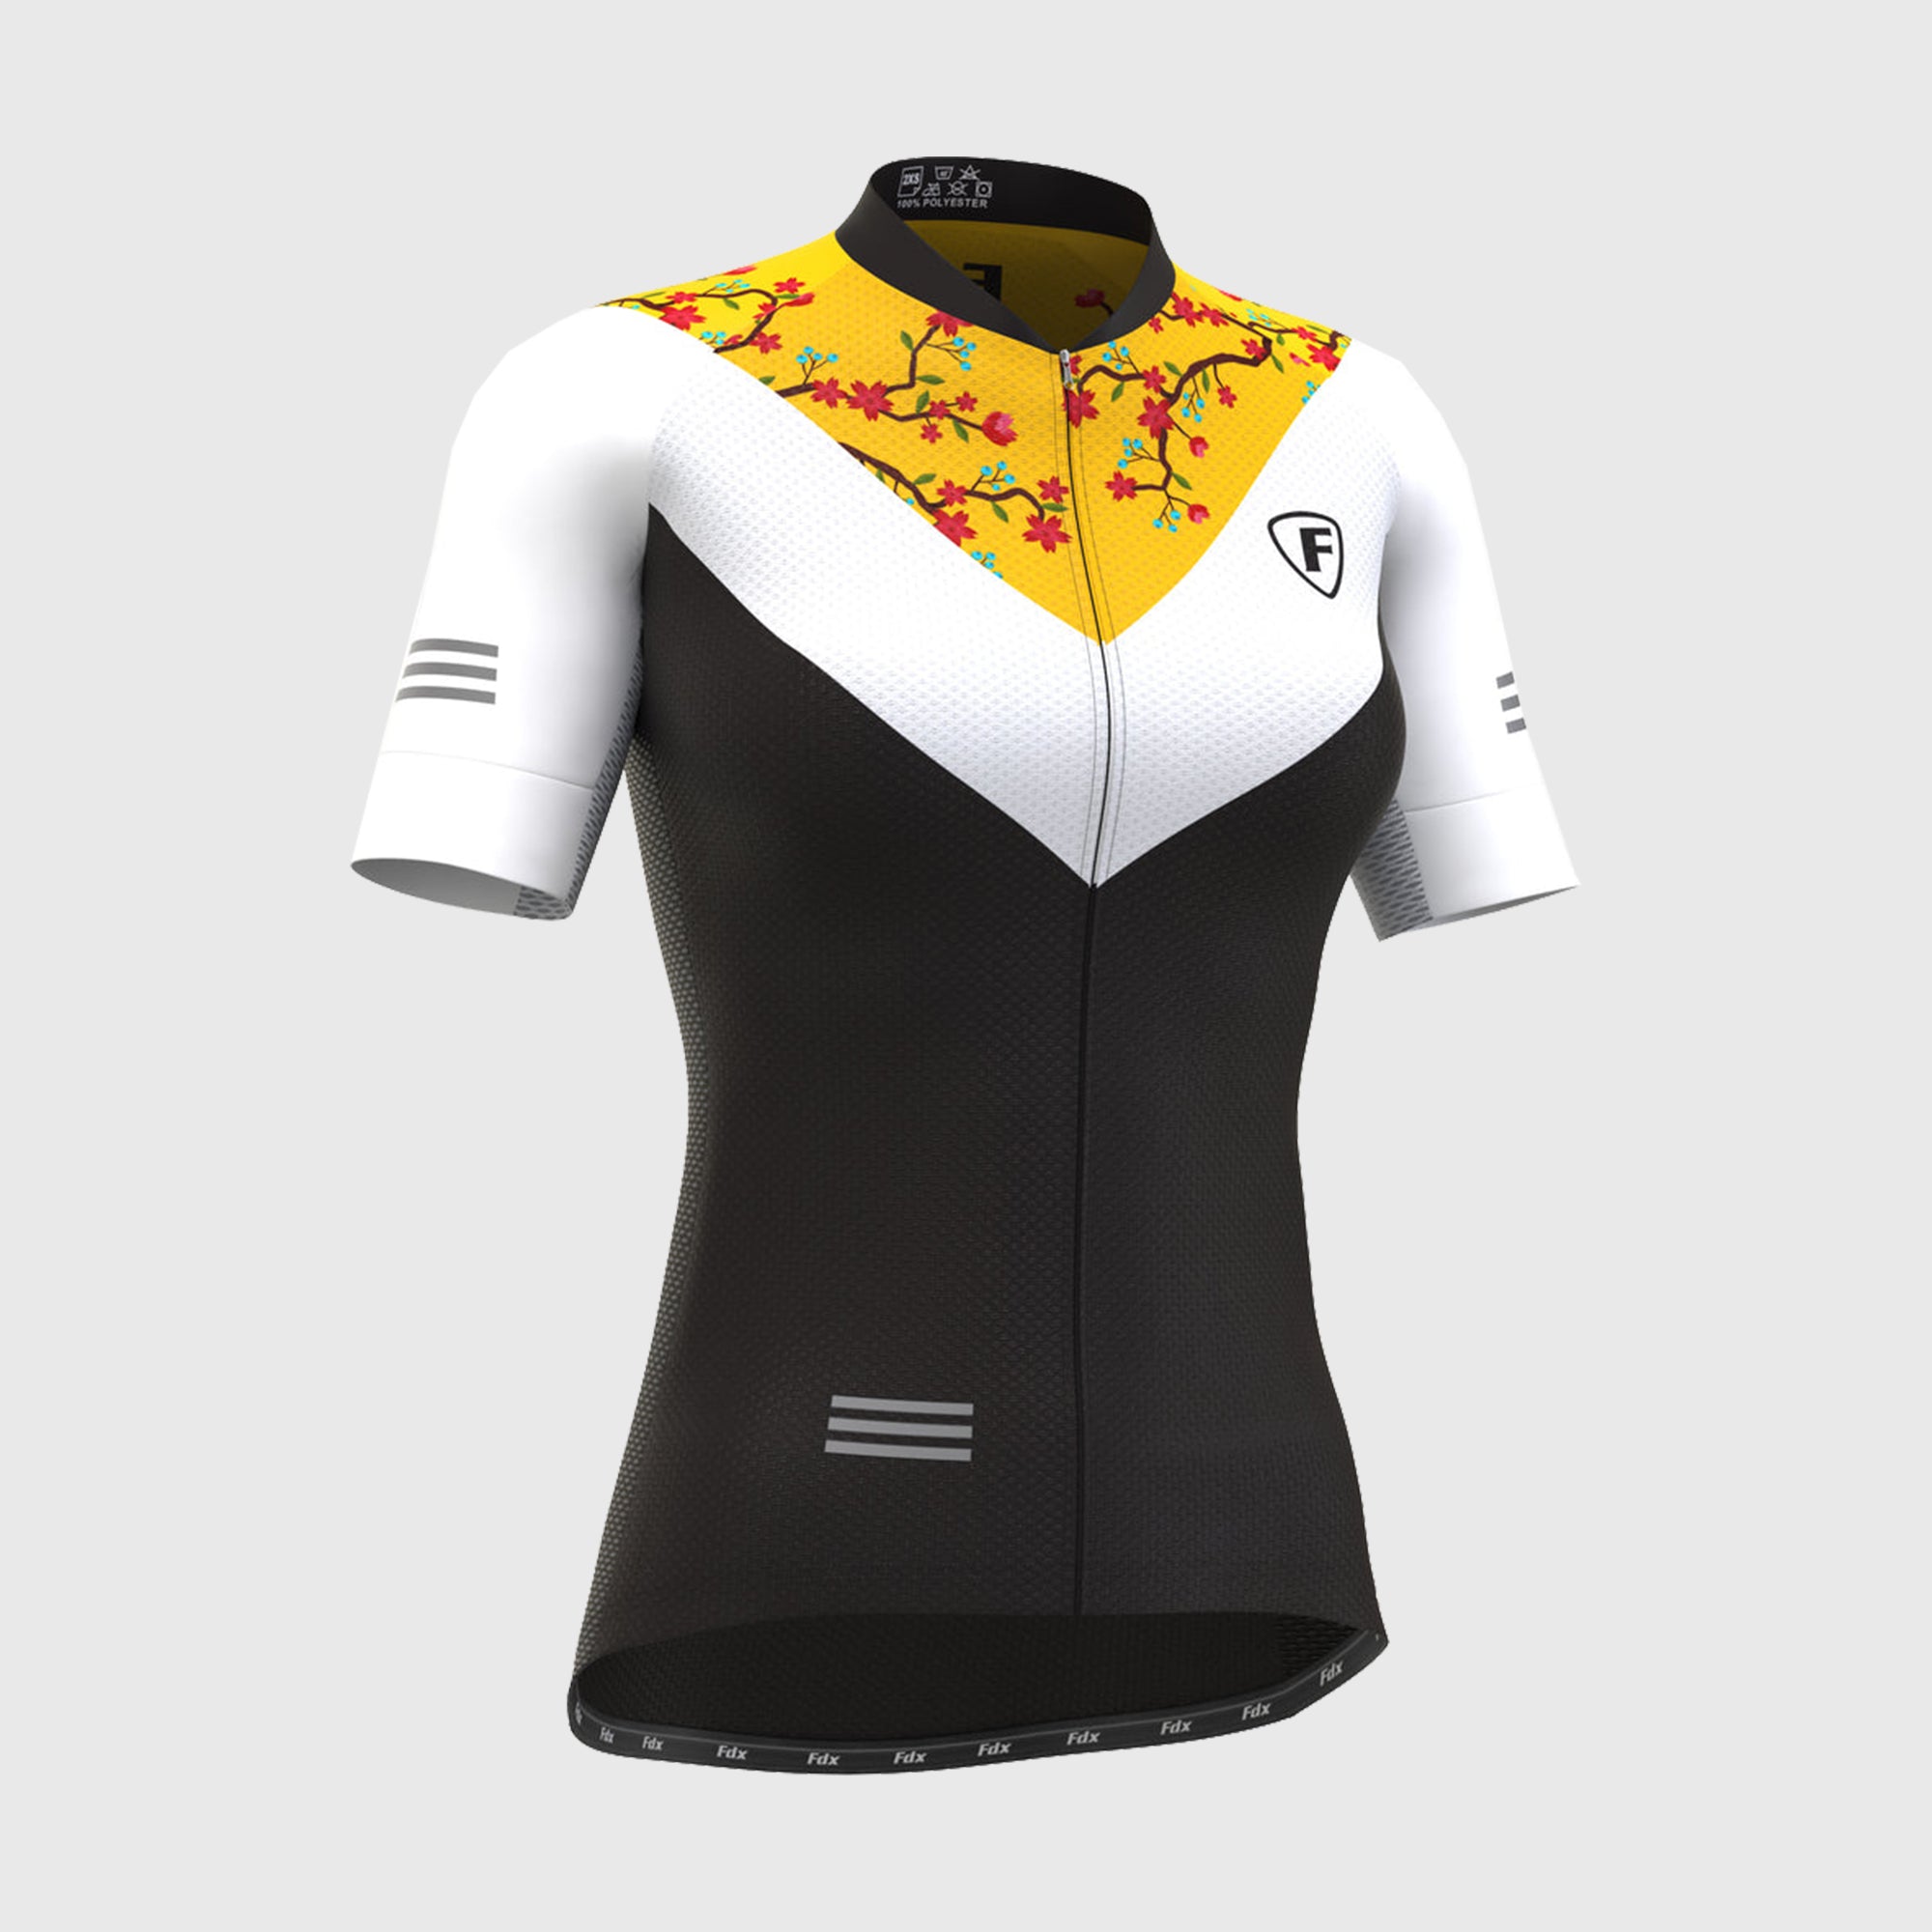 Fdx Women's Yellow & Black Short Sleeve Cycling Jersey Breathable Quick Dry Mesh Fleece Full Zip Hi Viz Reflectors & Pockets Summer Cycling Gear 